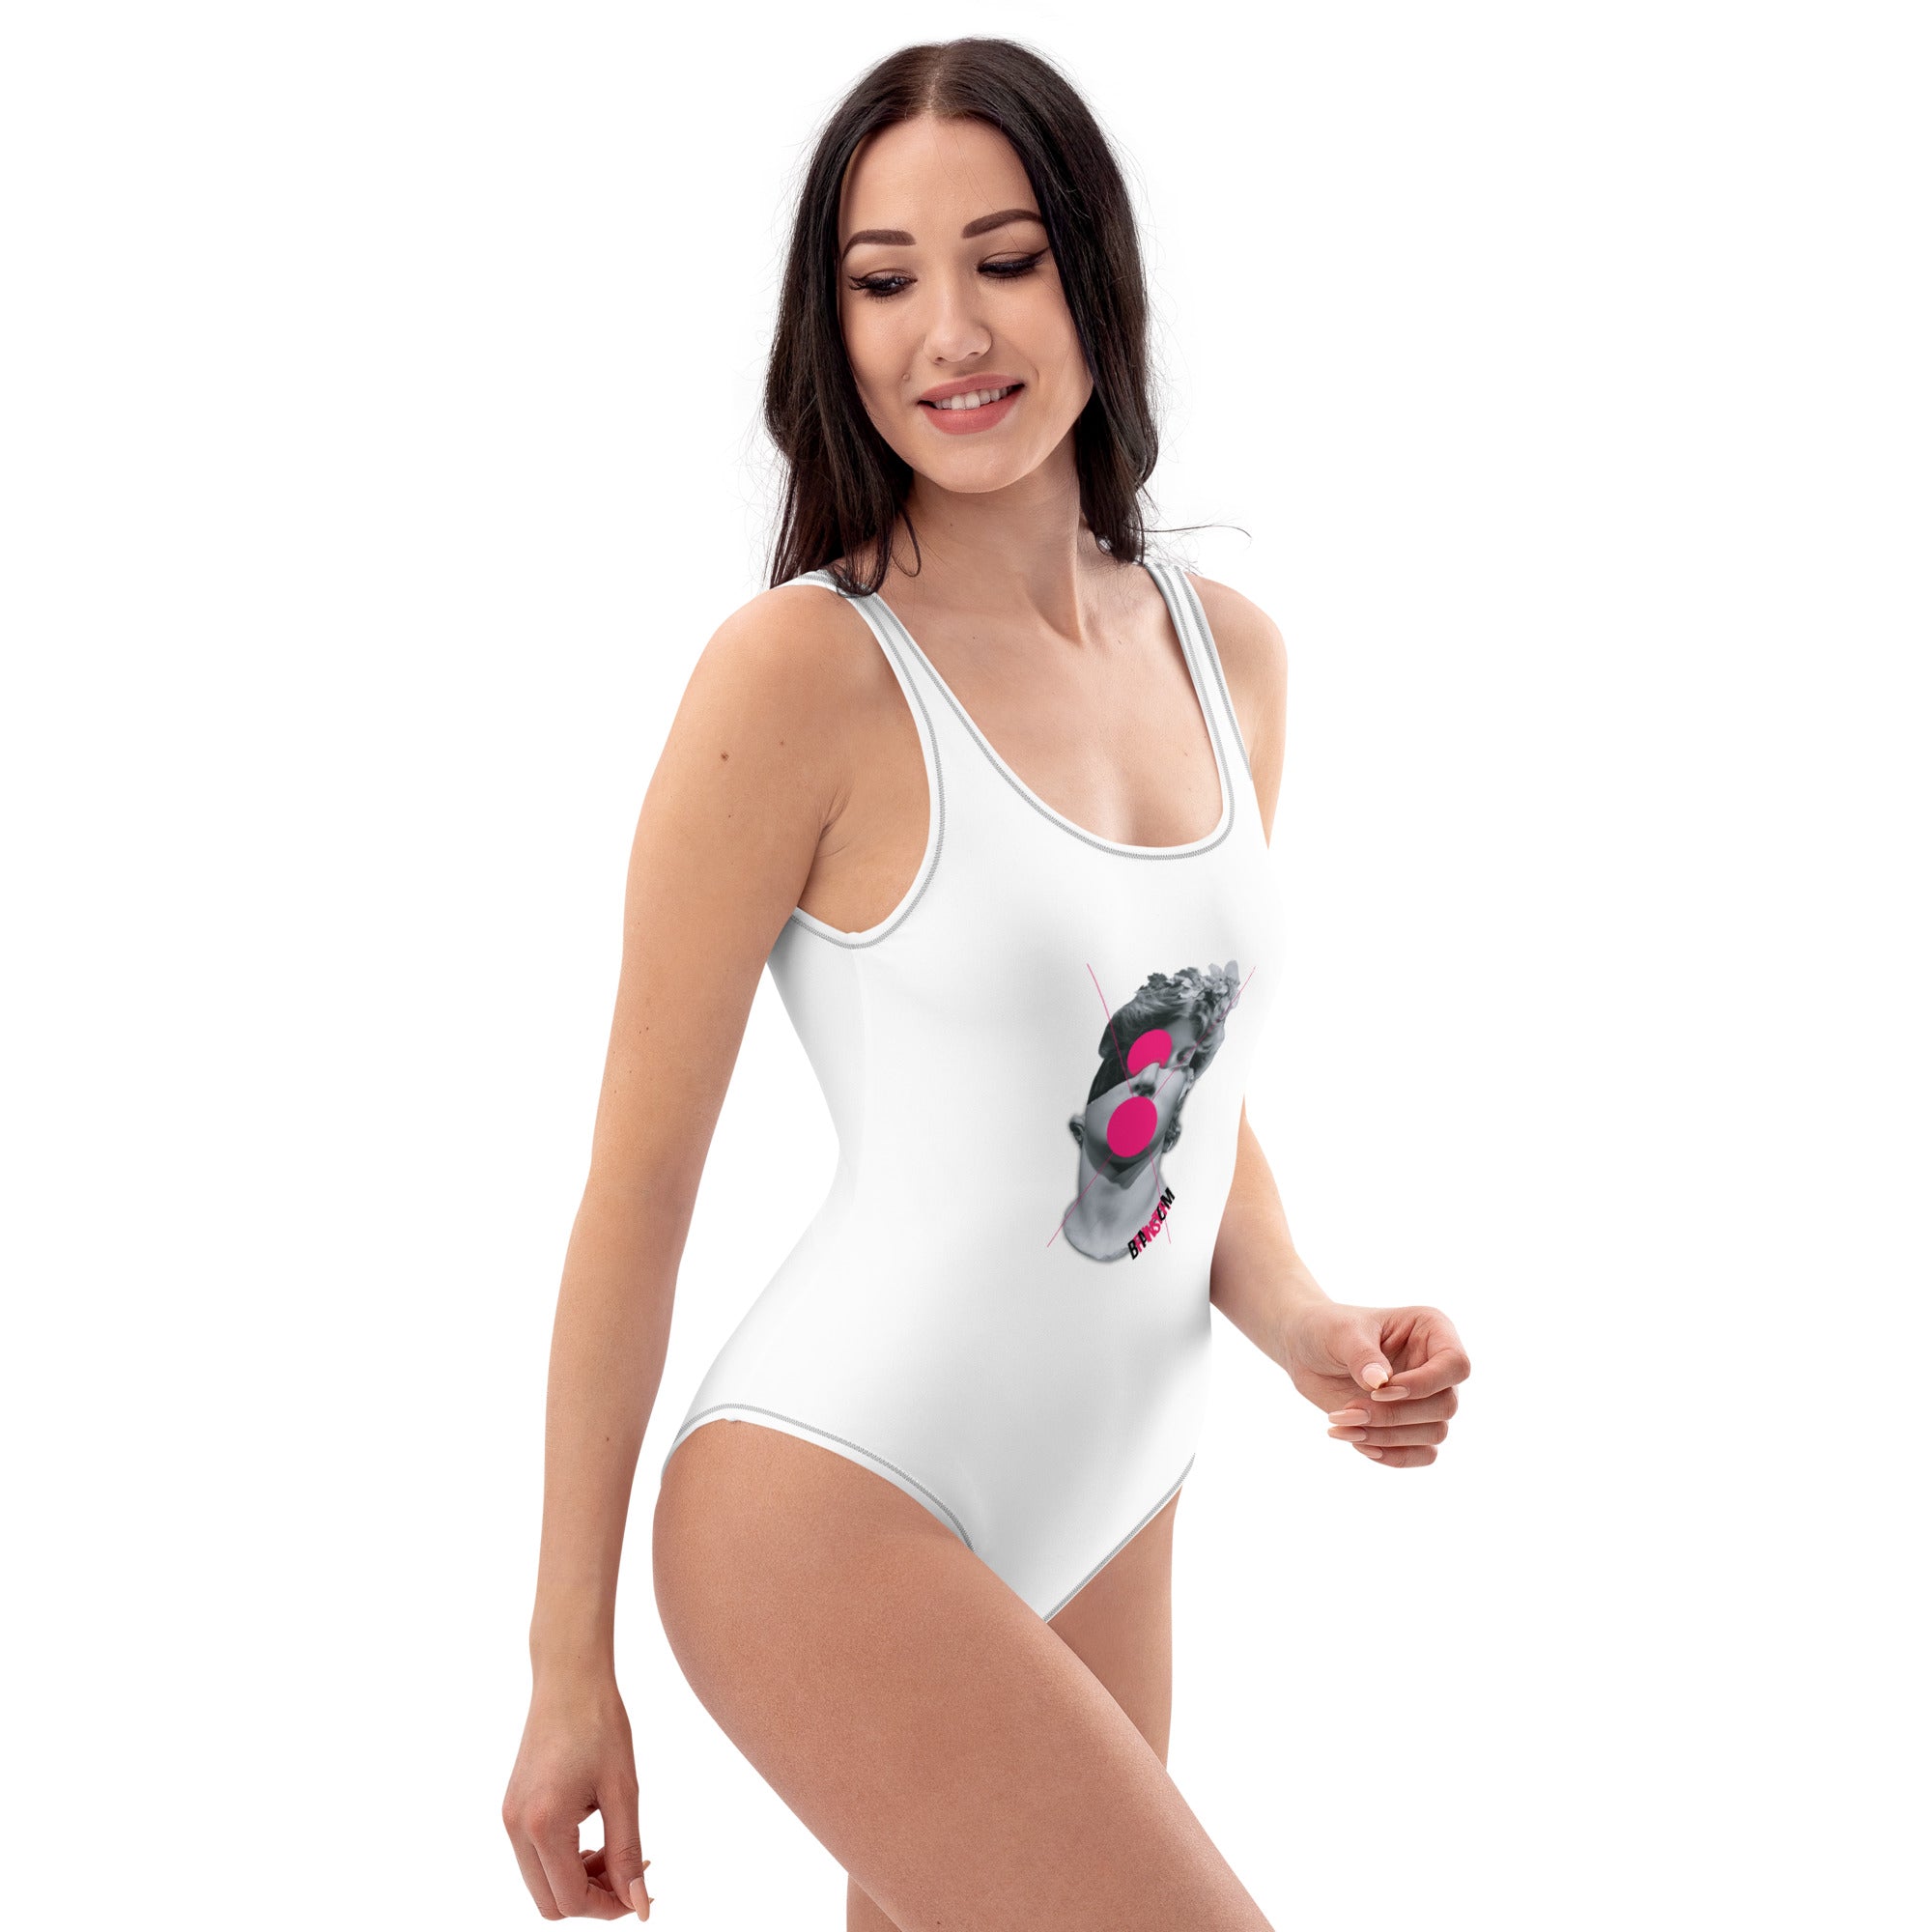 One-Piece Swimsuit